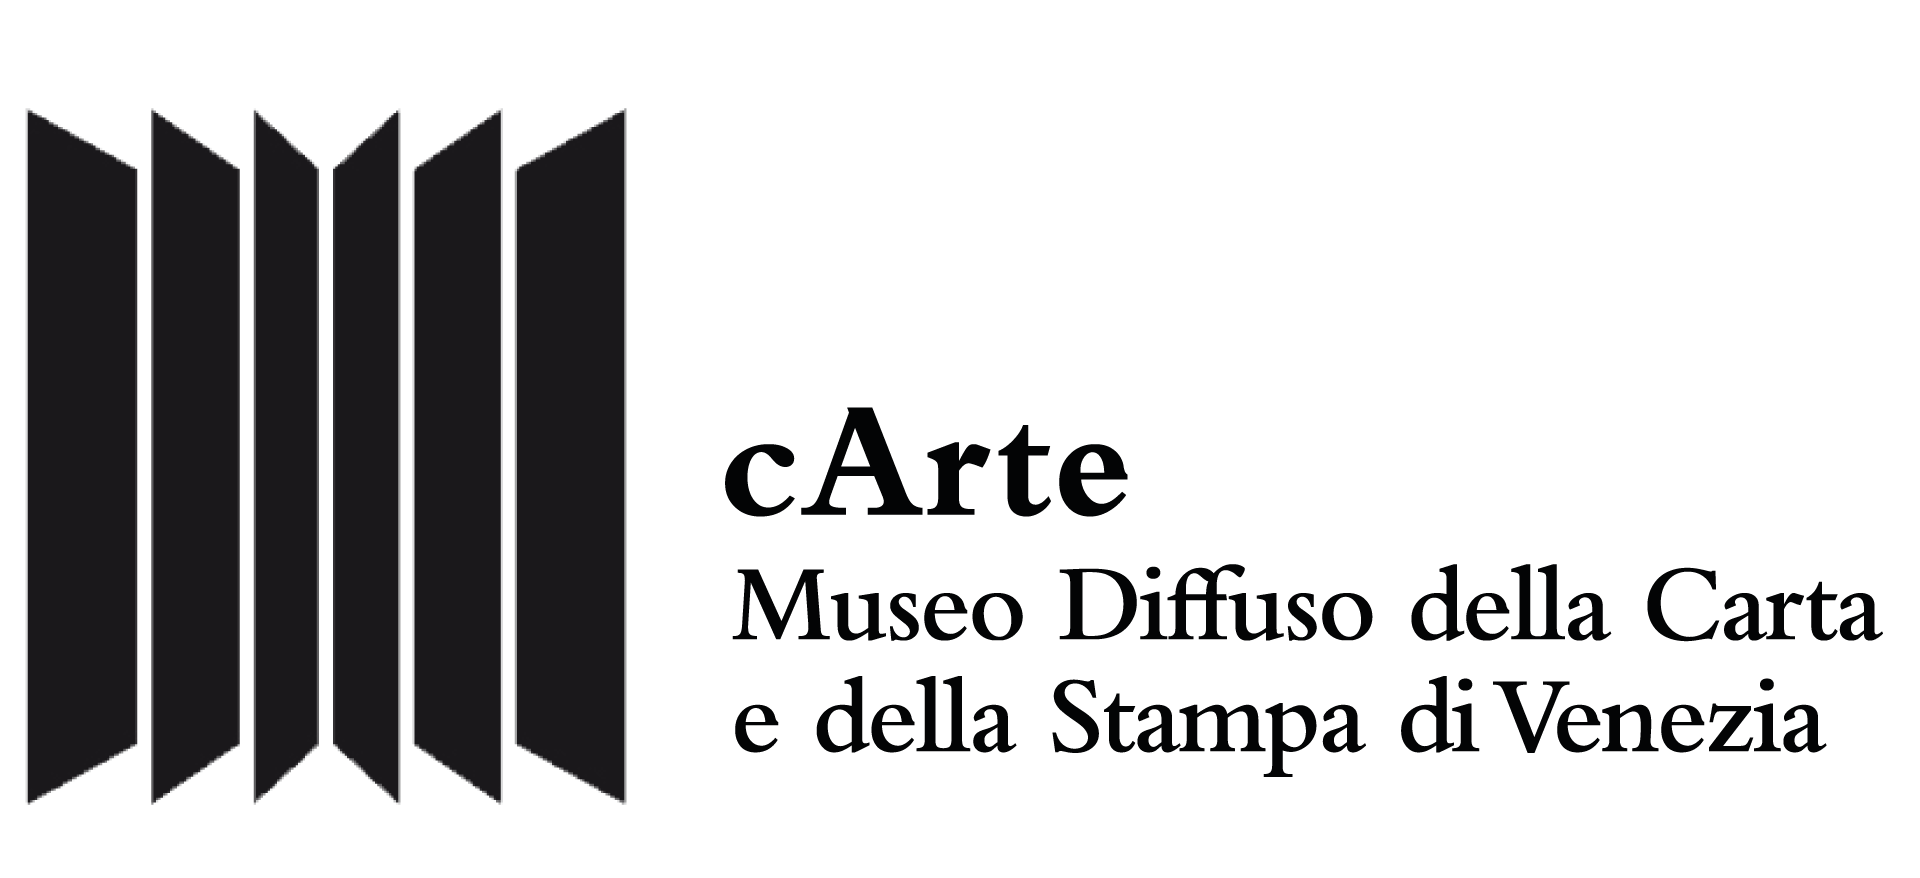 Marchio Museo cArte